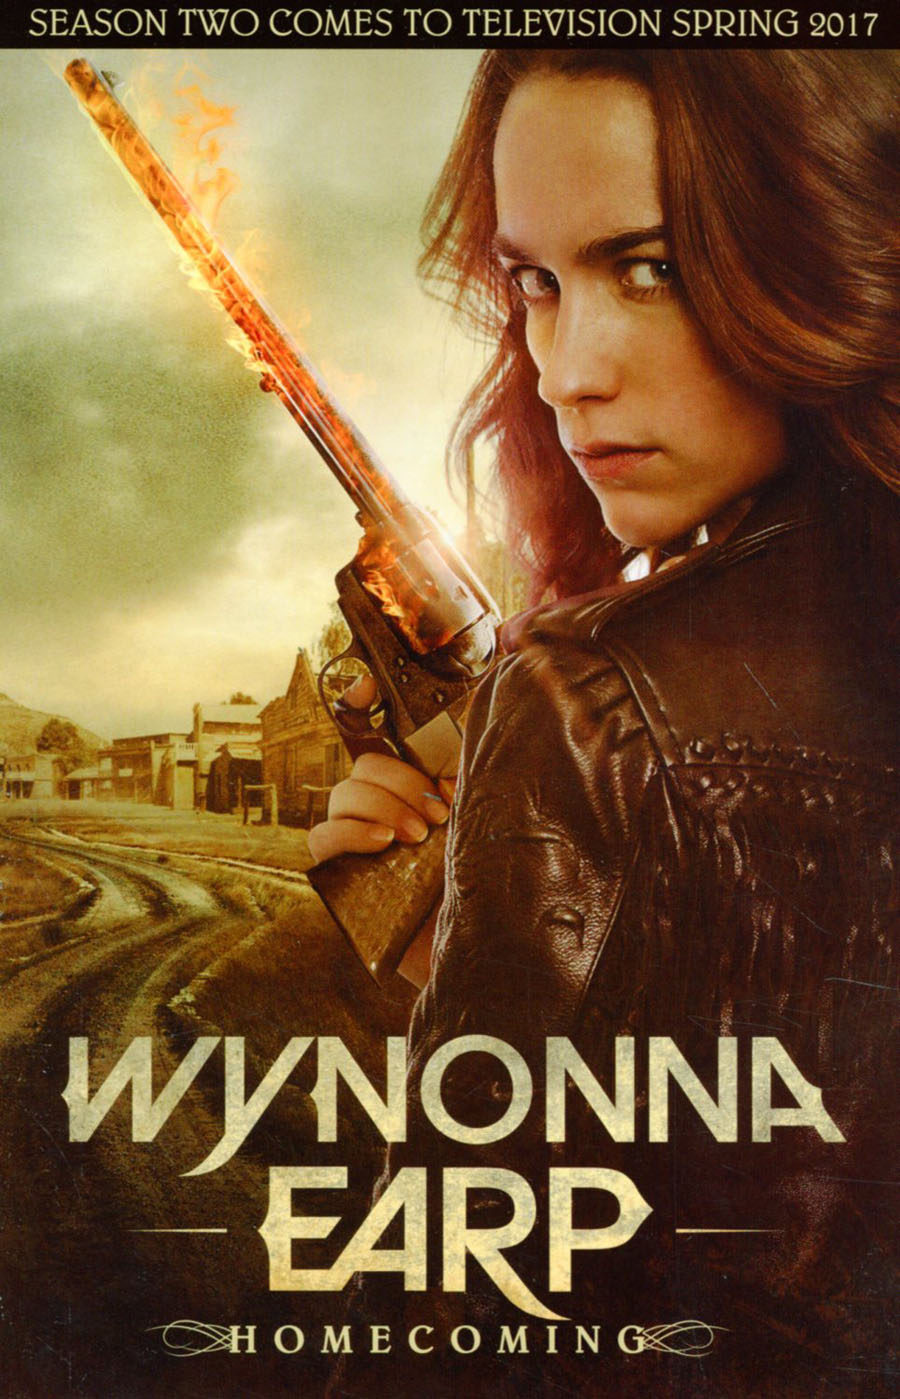 Wynonna Earp Vol 1 Homecoming TP